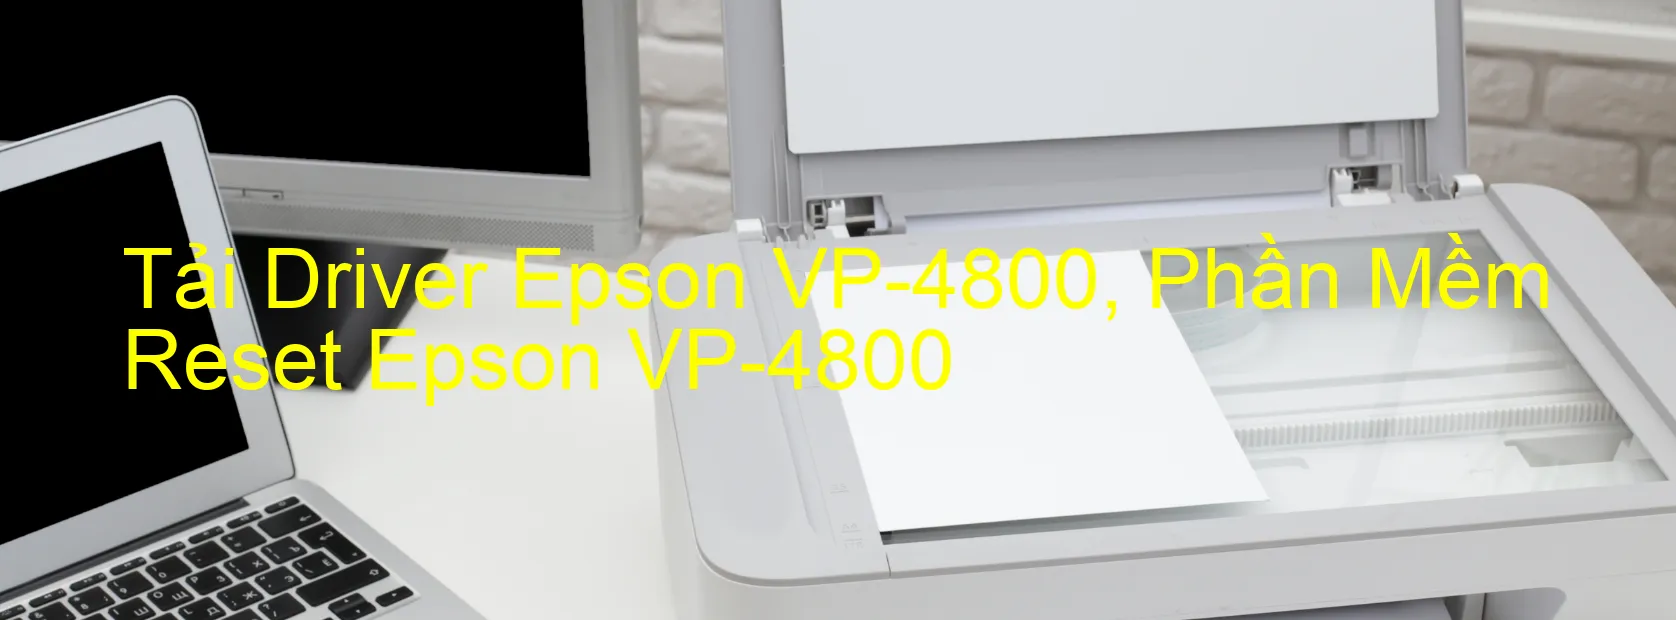 Driver Epson VP-4800, Phần Mềm Reset Epson VP-4800